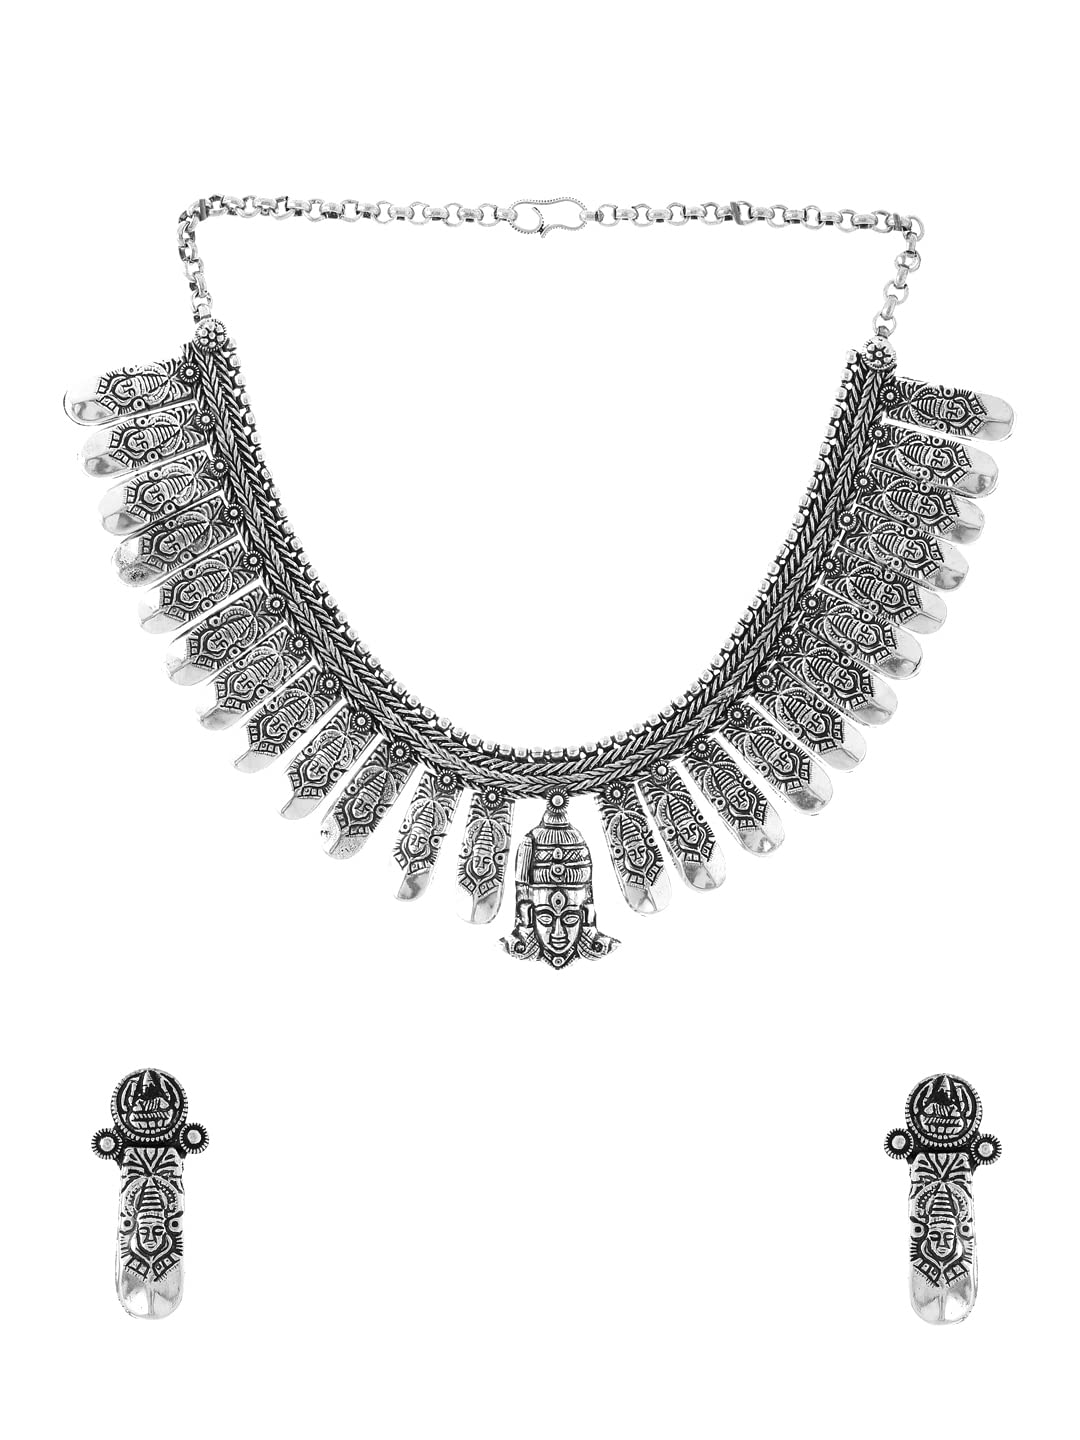 NOVICA Artisan Handmade Men's .925 Sterling Silver Chain Necklace Indonesia  Balinese Traditional 'Sleek' | Amazon.com